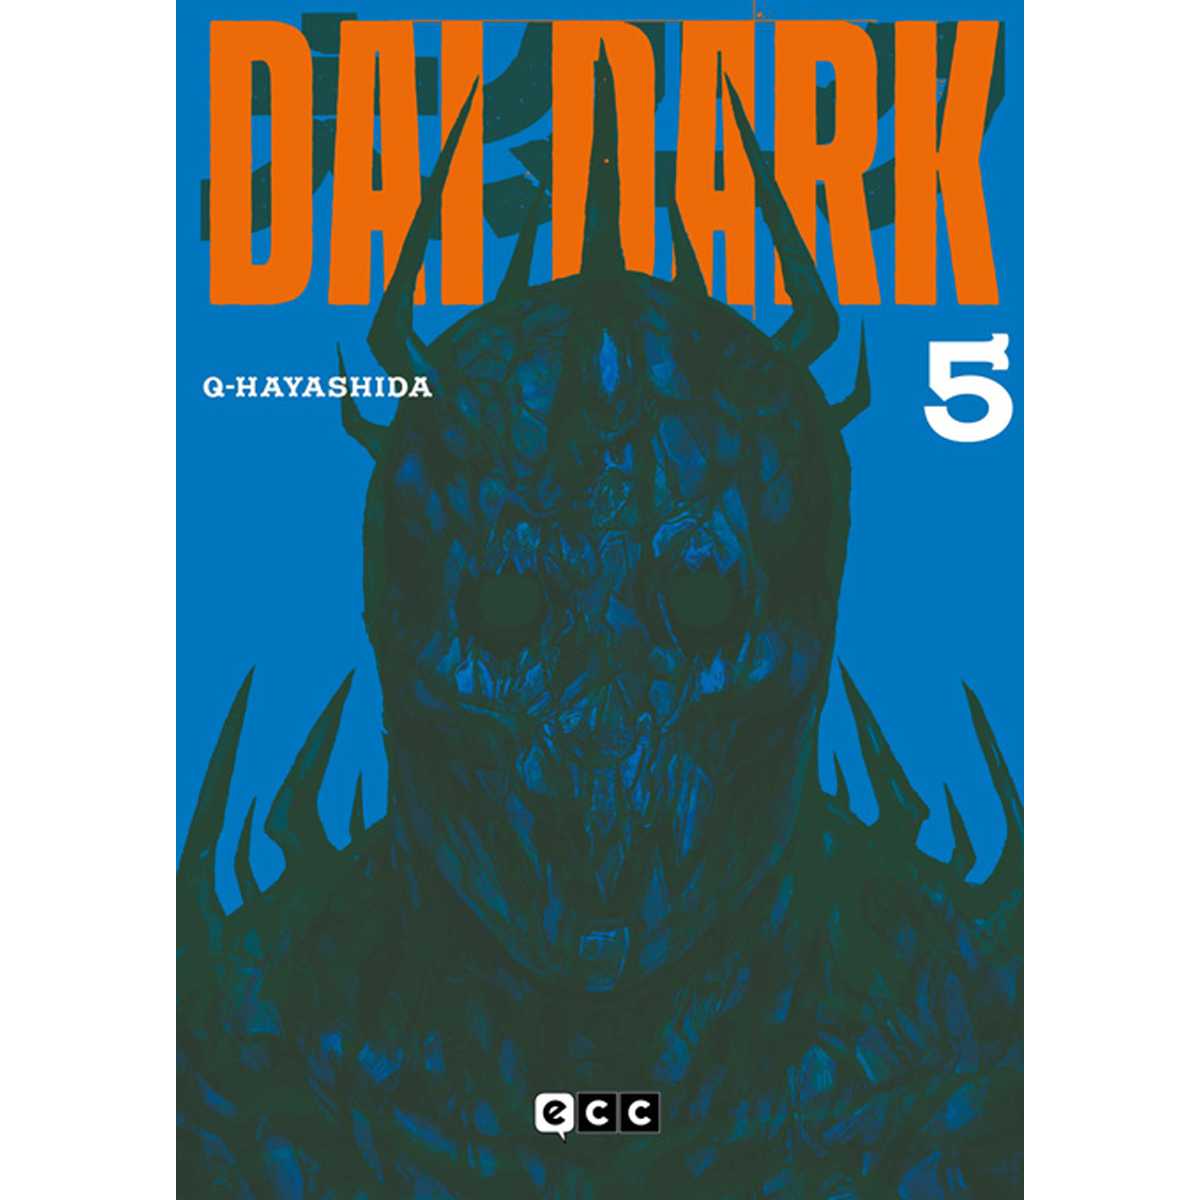 Dai Dark 05